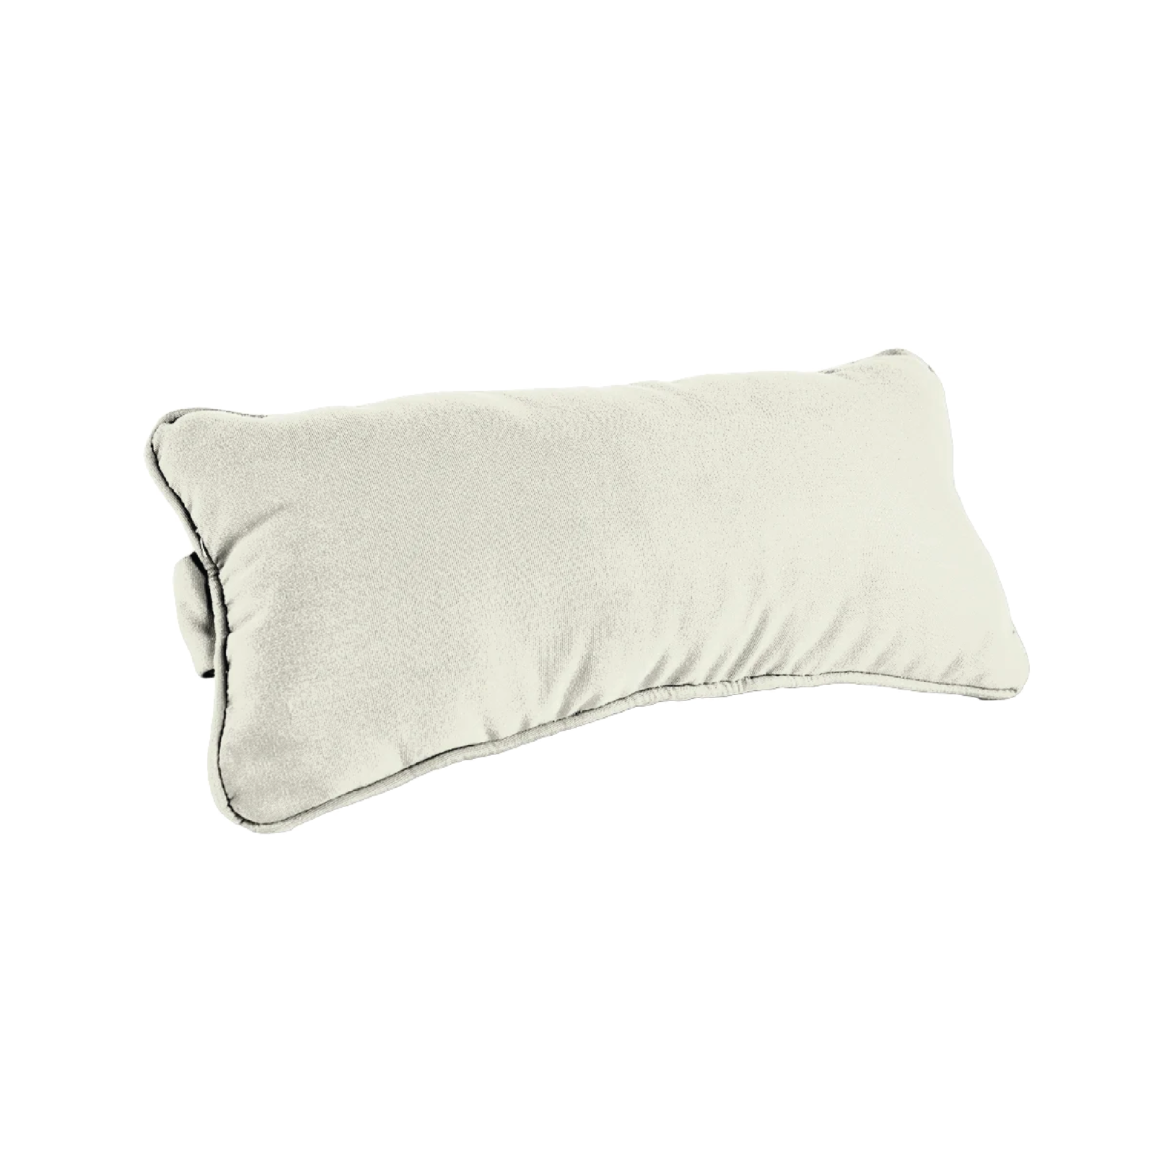 BOXHILL's Tanning Headrest Pillows